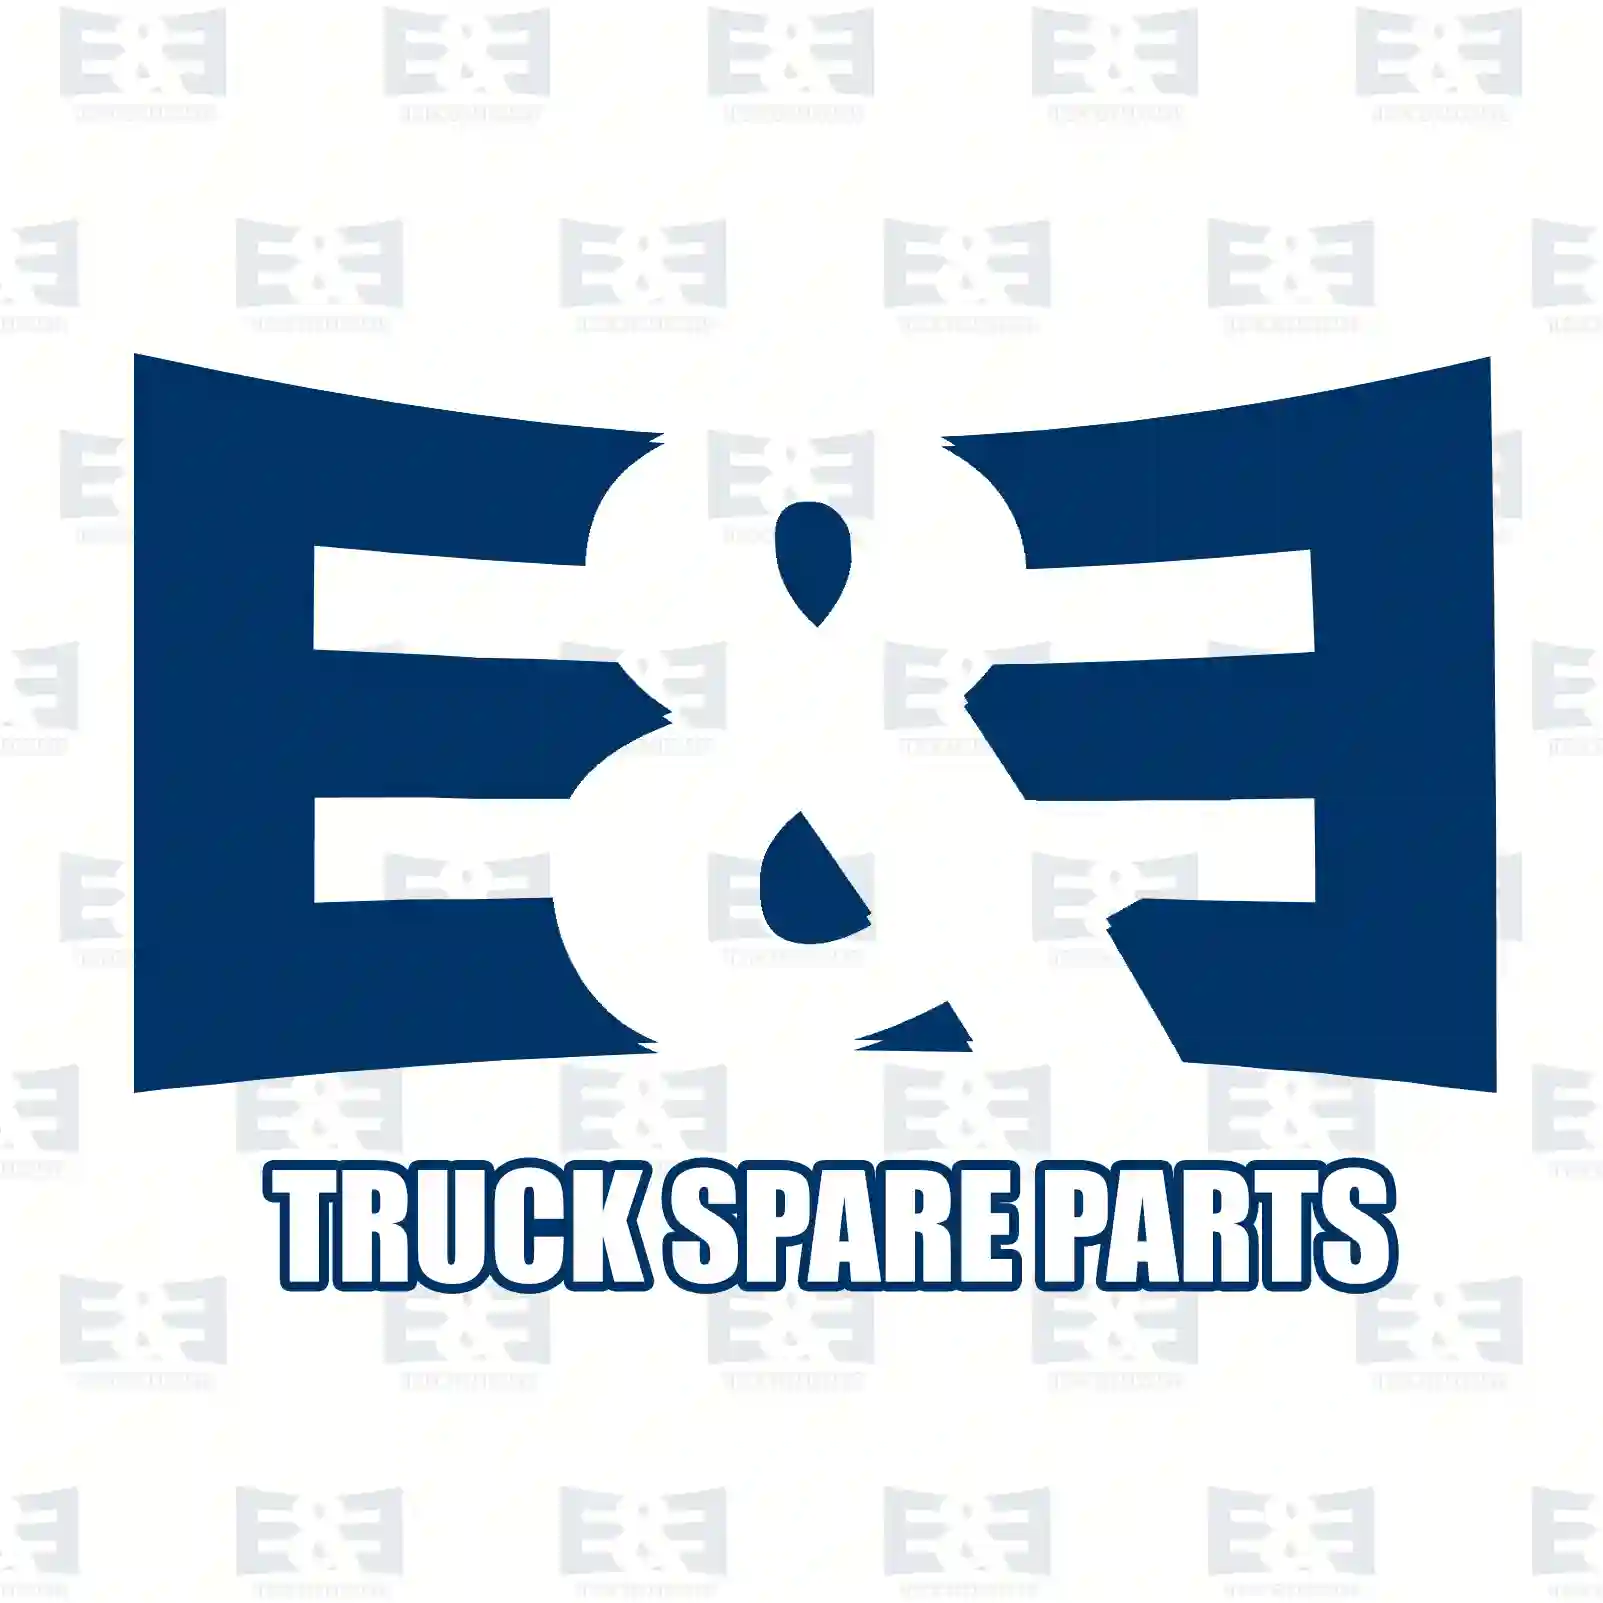 Spring brake cylinder, 2E2293267, 1117755, 1331410, 1802696, ZG50773-0008, ||  2E2293267 E&E Truck Spare Parts | Truck Spare Parts, Auotomotive Spare Parts Spring brake cylinder, 2E2293267, 1117755, 1331410, 1802696, ZG50773-0008, ||  2E2293267 E&E Truck Spare Parts | Truck Spare Parts, Auotomotive Spare Parts